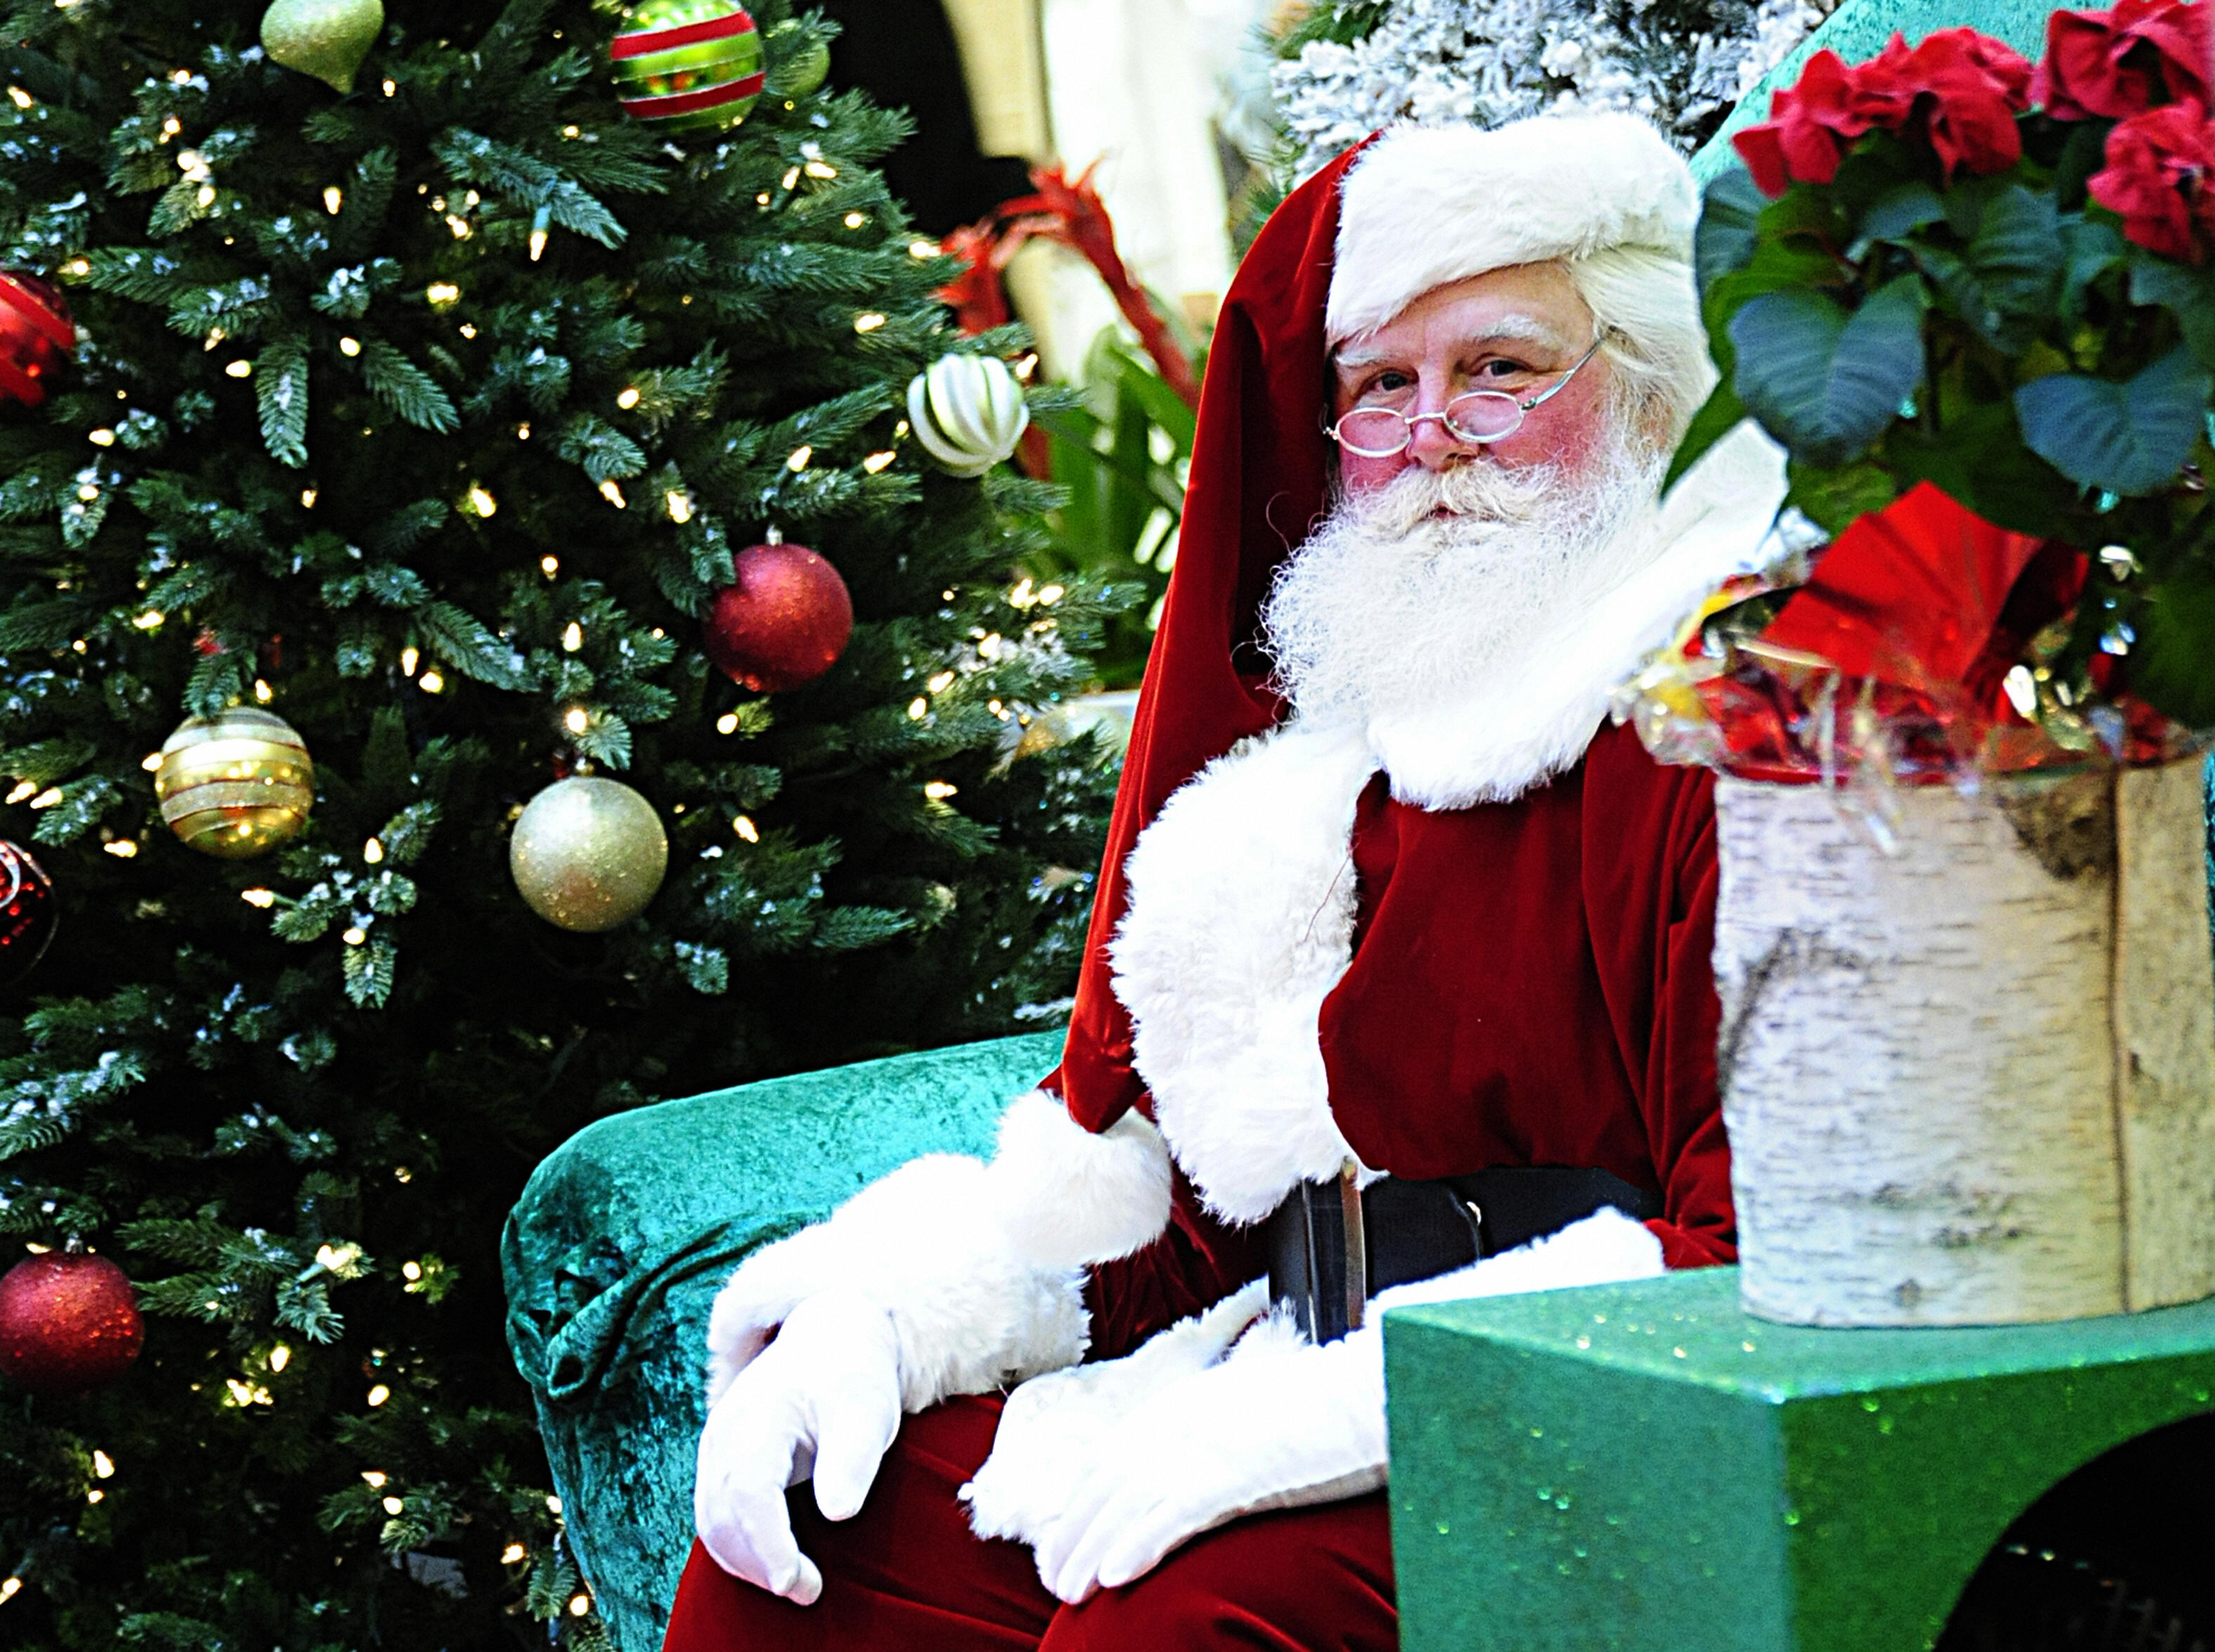 Santa Claus waits to greet children at the Tysons Corner mall in Tysons Corner, Virginia, on Dec. 20, 2008.